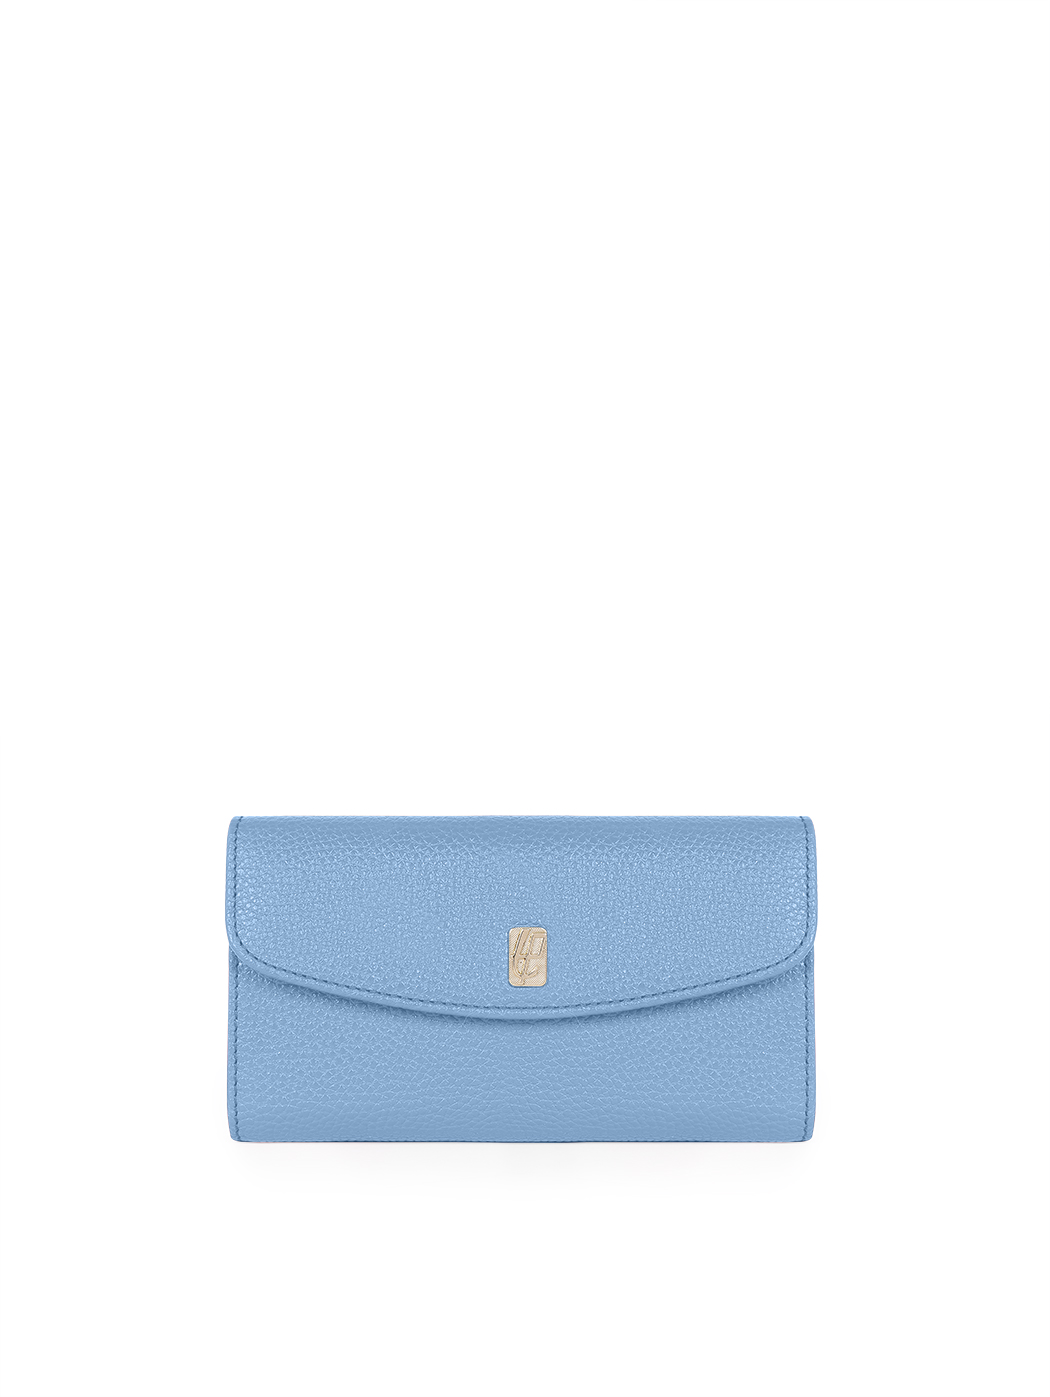 Long light blue leather wallet